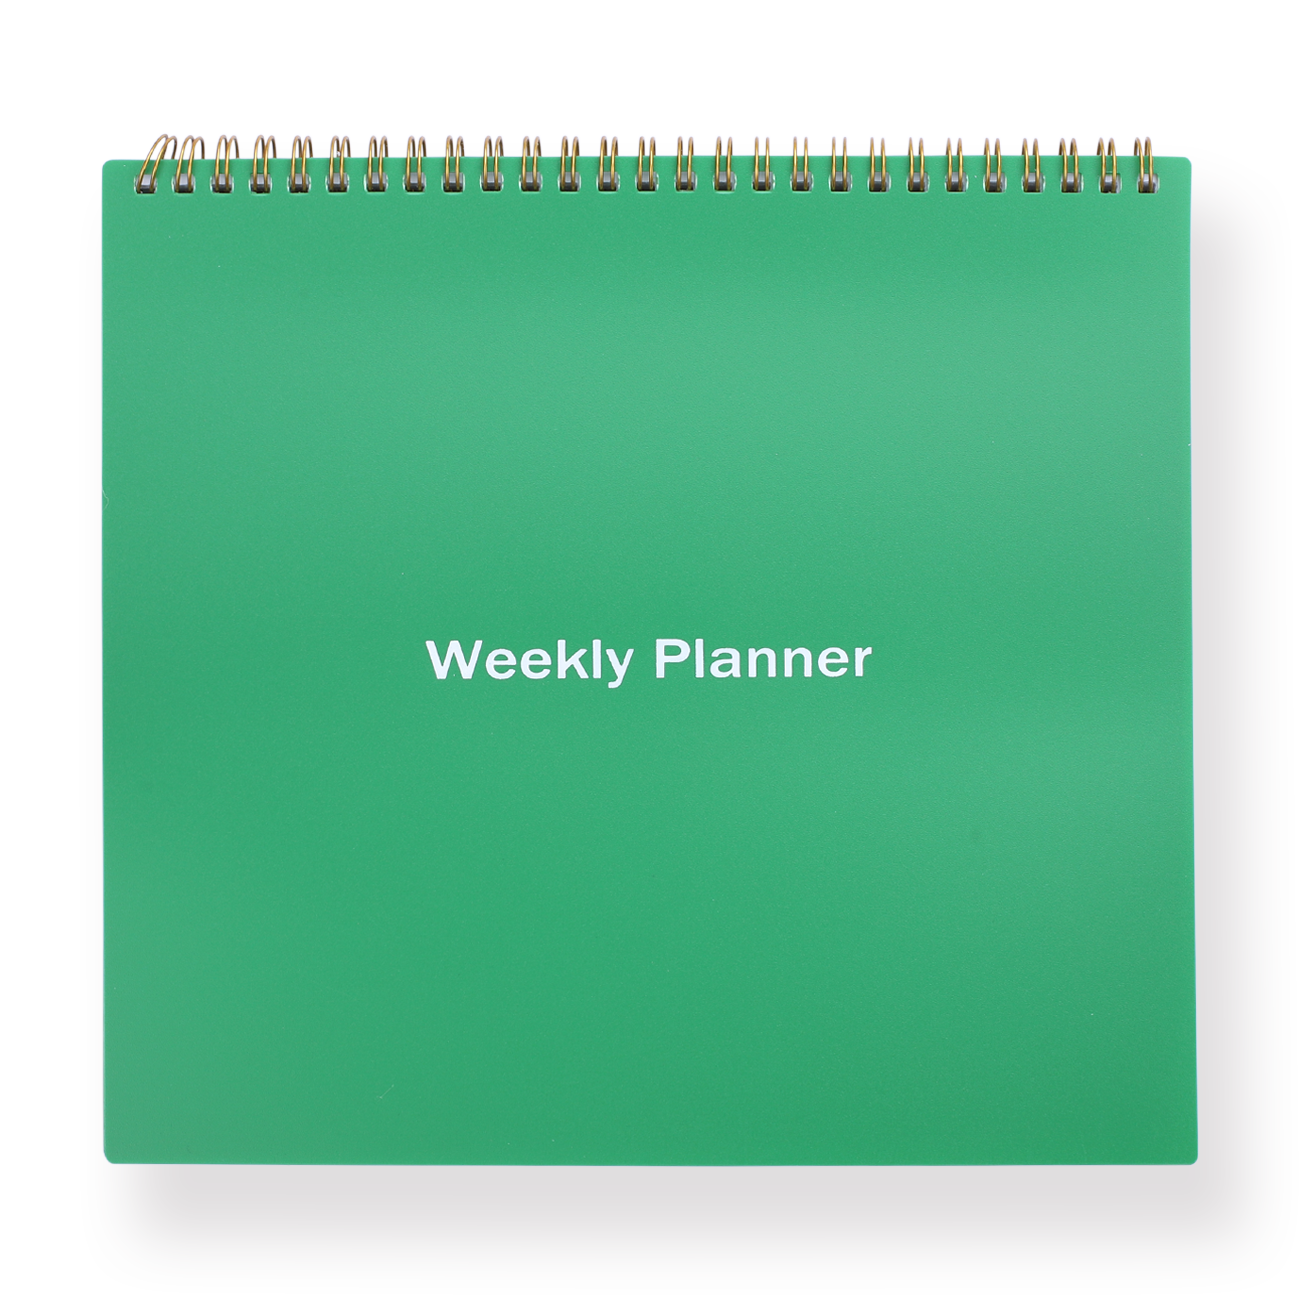 Weekly Planner - Green